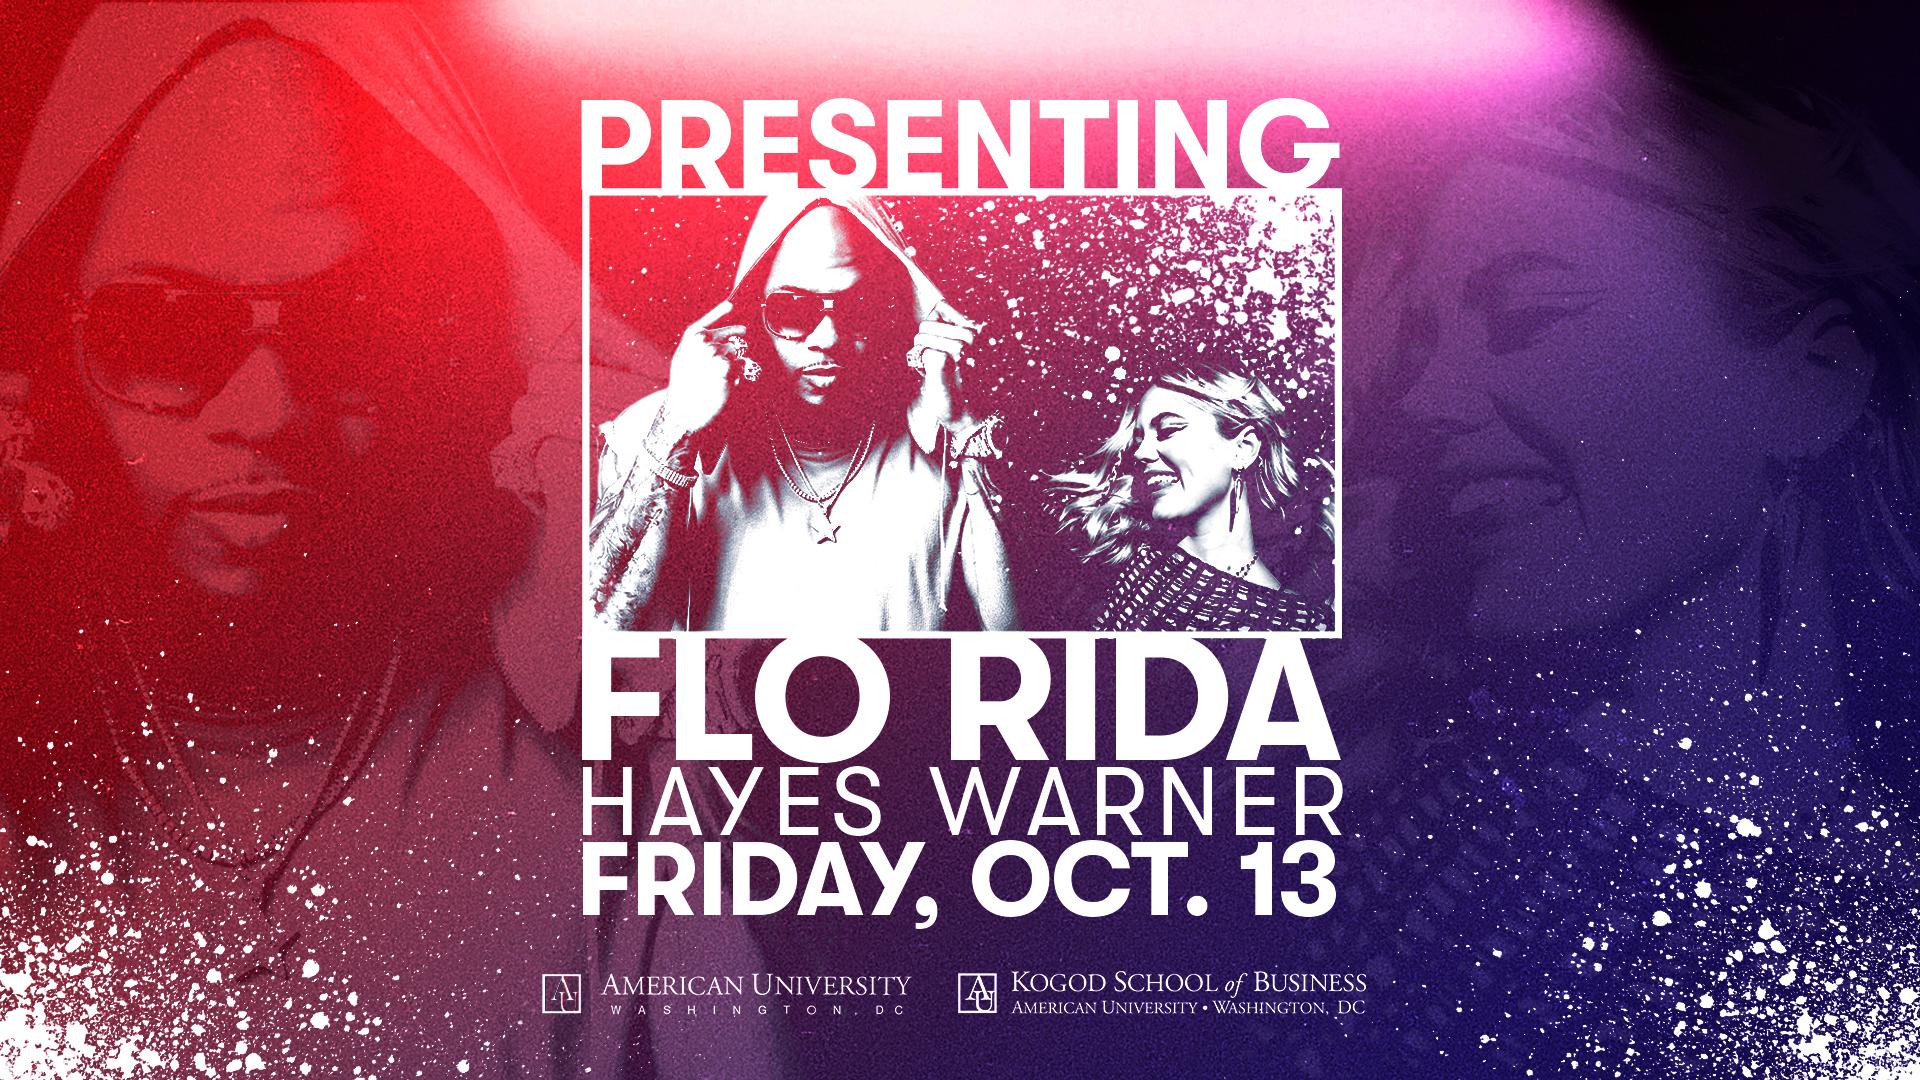 Presenting Flo Rida and Hayes Warner Friday October 13